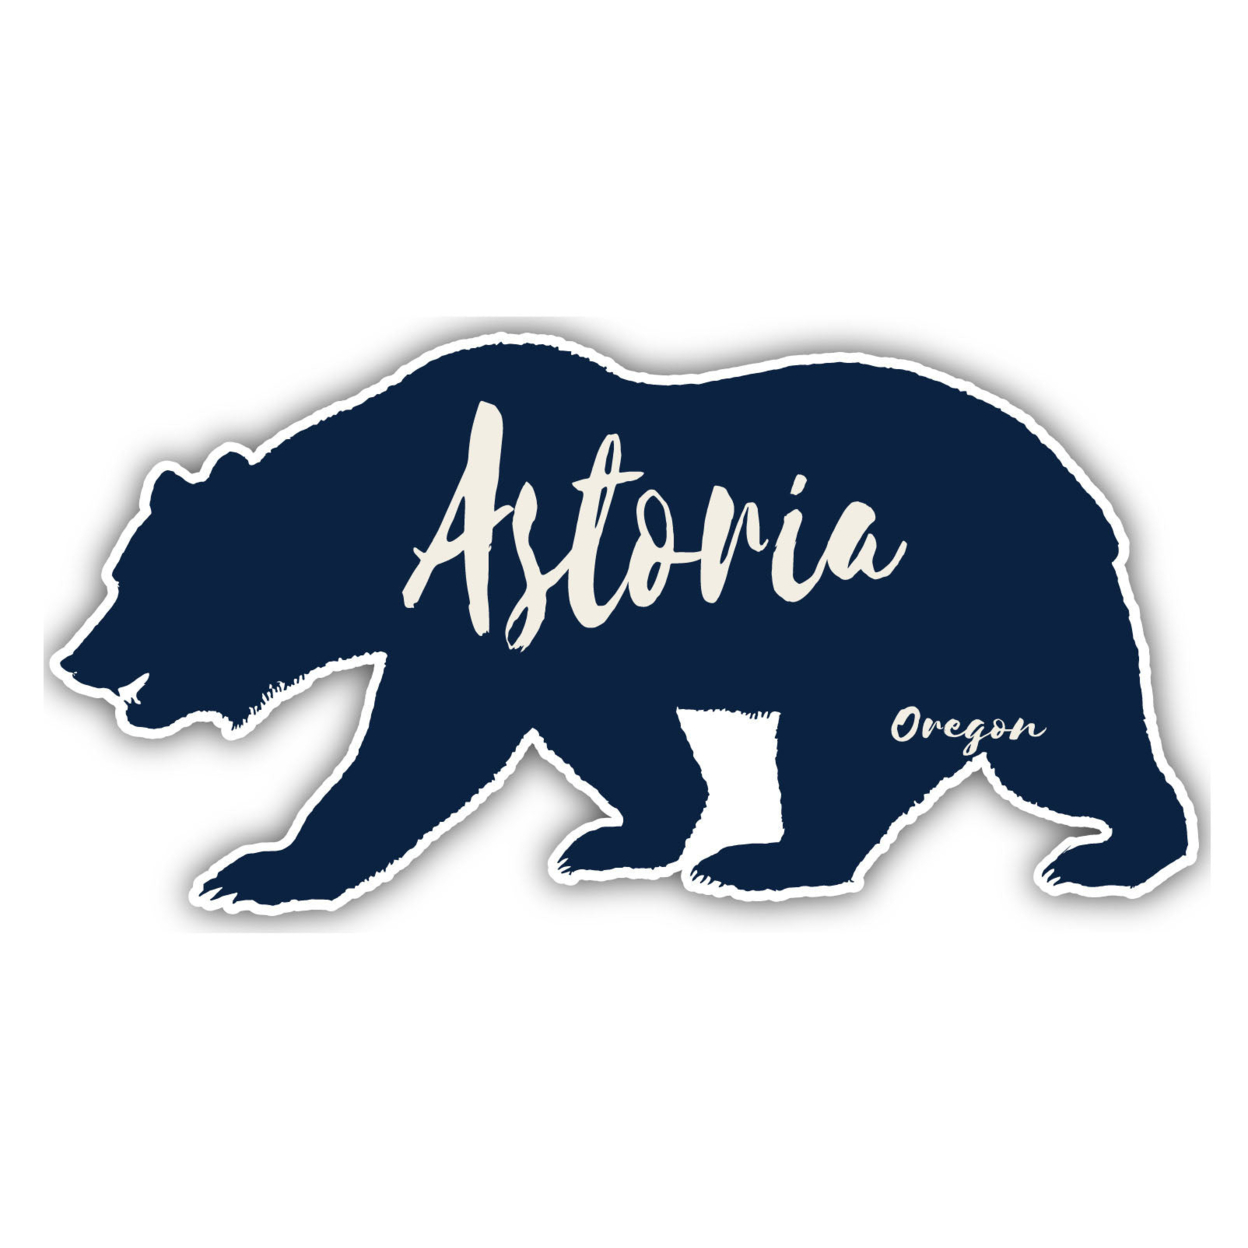 Astoria Oregon Souvenir Decorative Stickers (Choose Theme And Size) - 4-Pack, 6-Inch, Tent